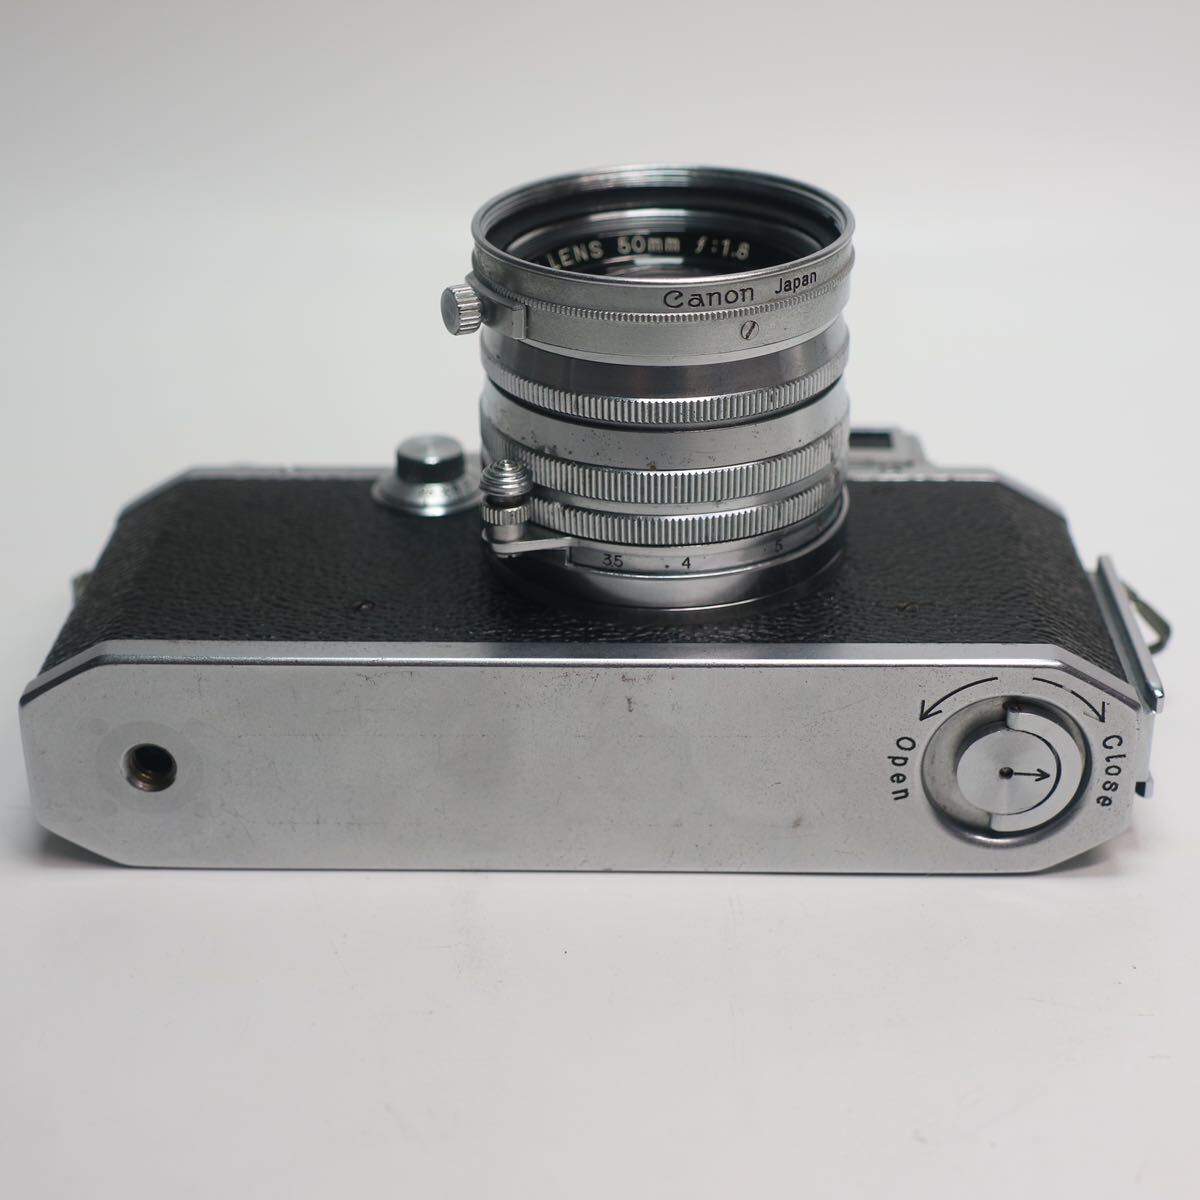 03) Canon Canon bar nak type range finder camera CANON LENS 50mm F1.8 lens set 